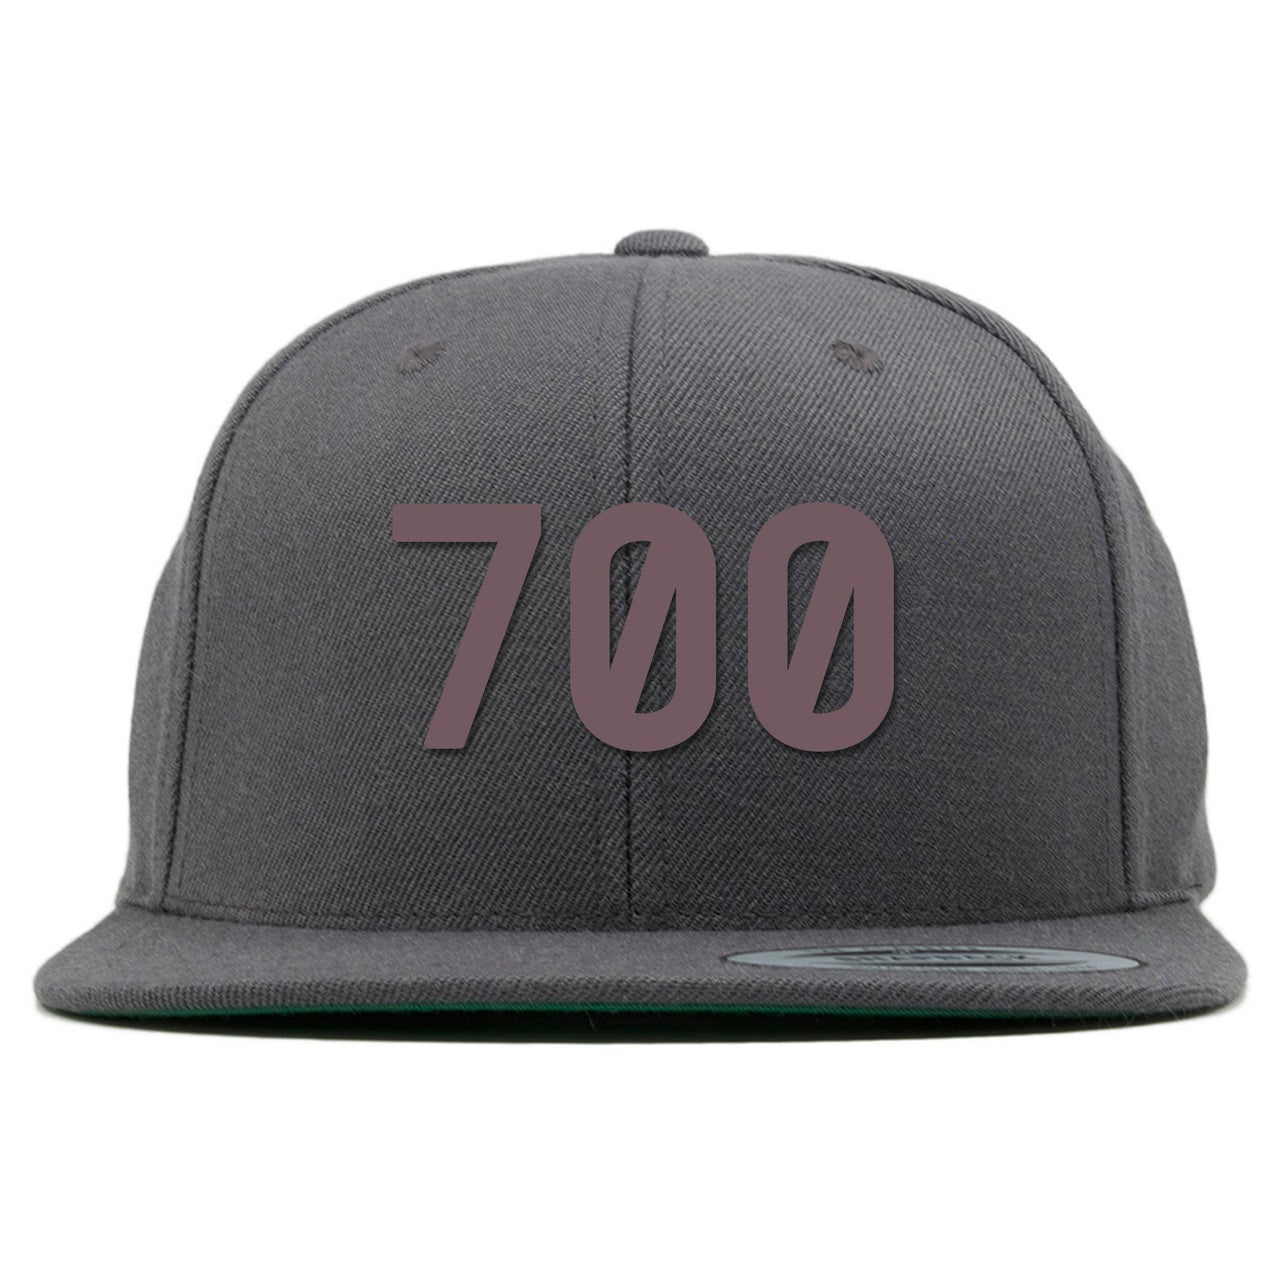 Geode 700s Snapback | 700, Gray